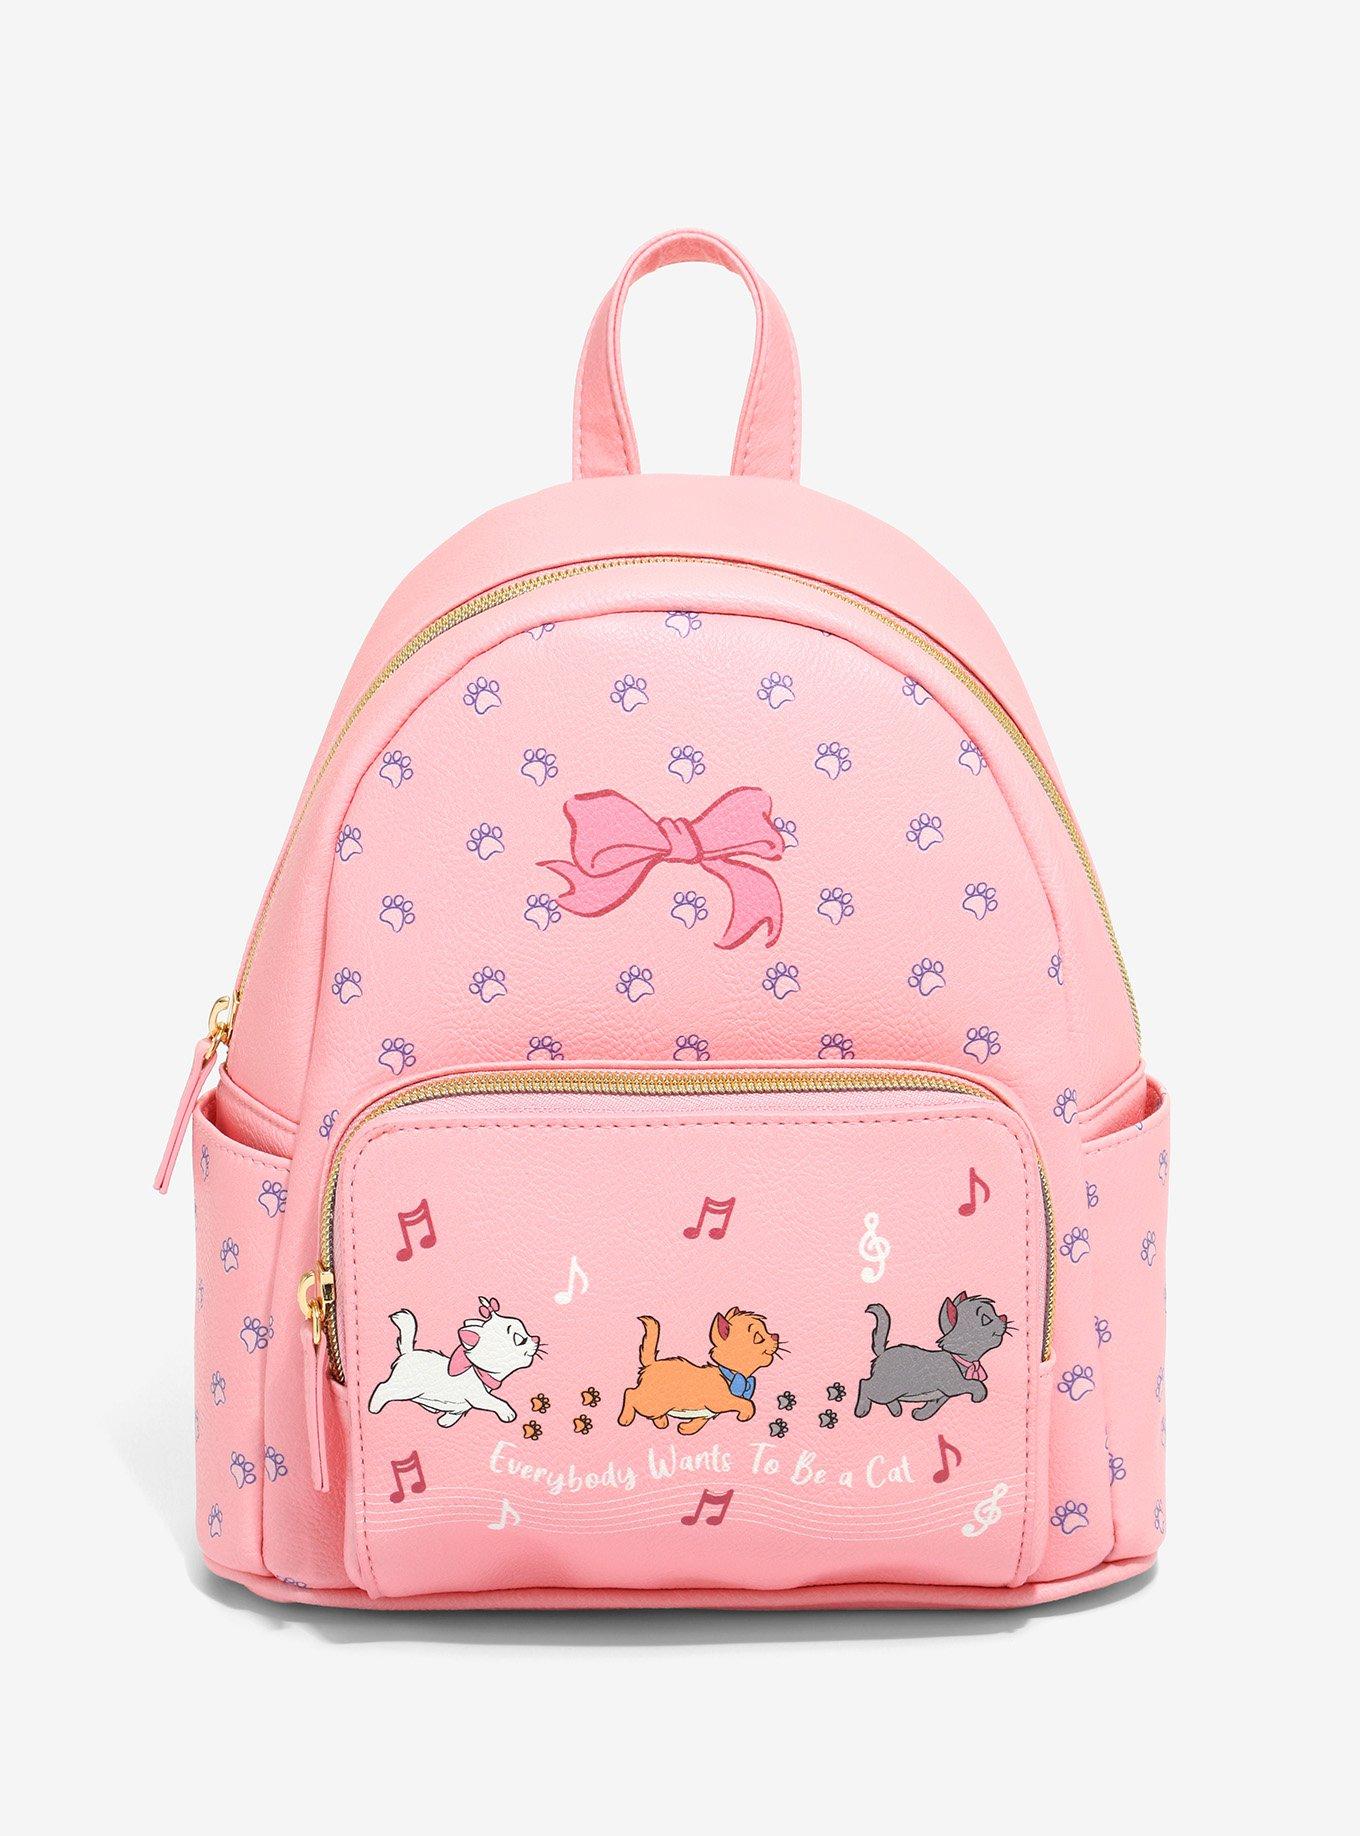 Danielle Nicole - Alice in Wonderland Cheshire Cat Mini-Backpack